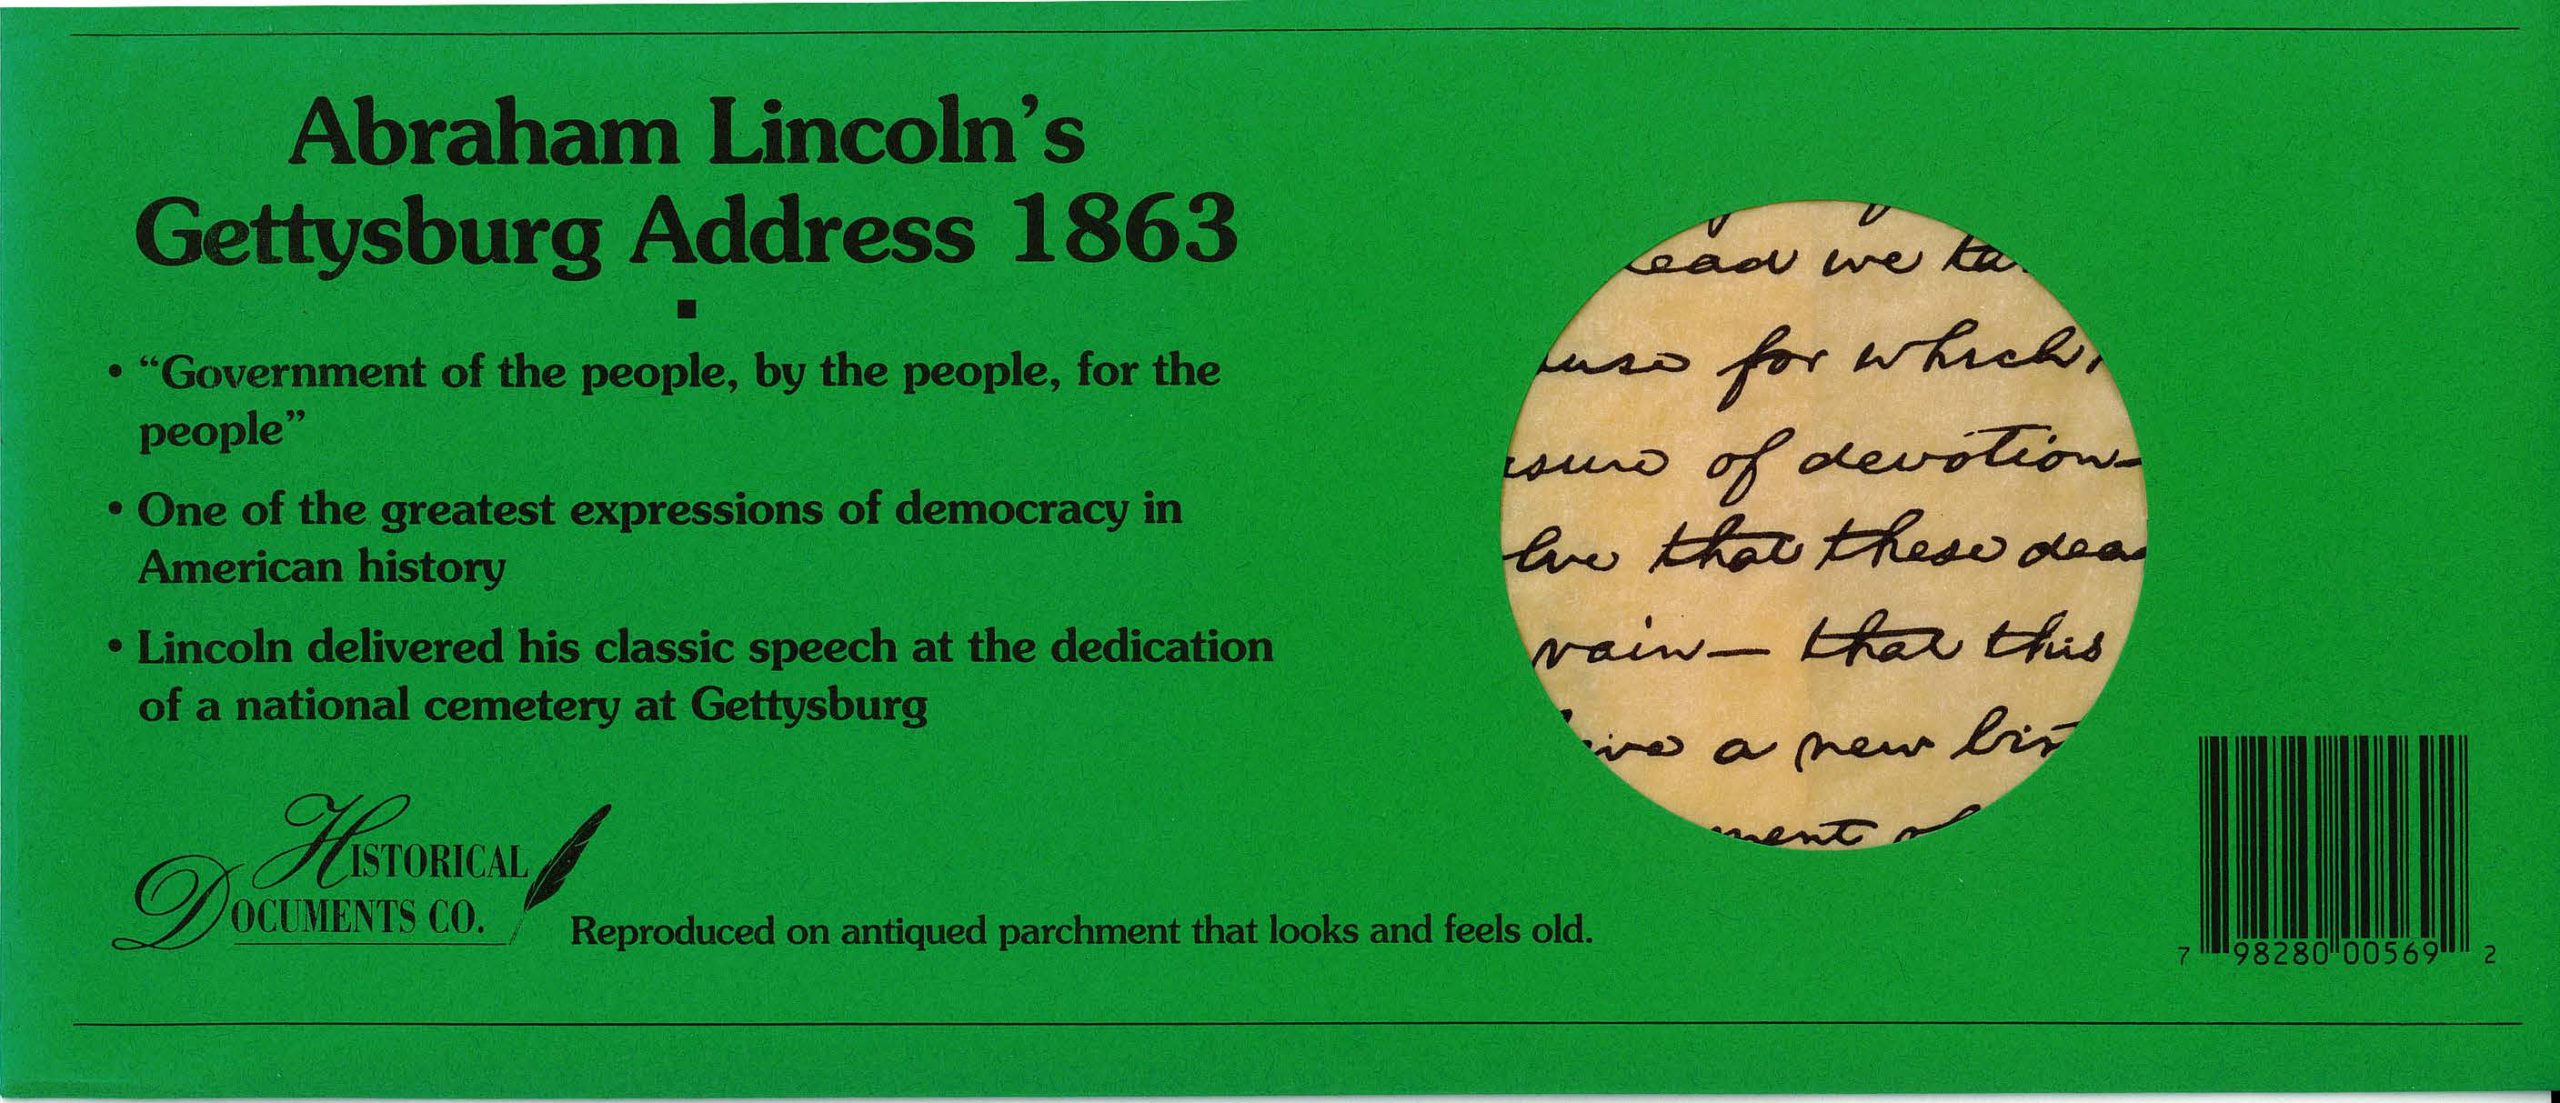 Documents- Abraham Lincoln’s Gettysburg Address 1863